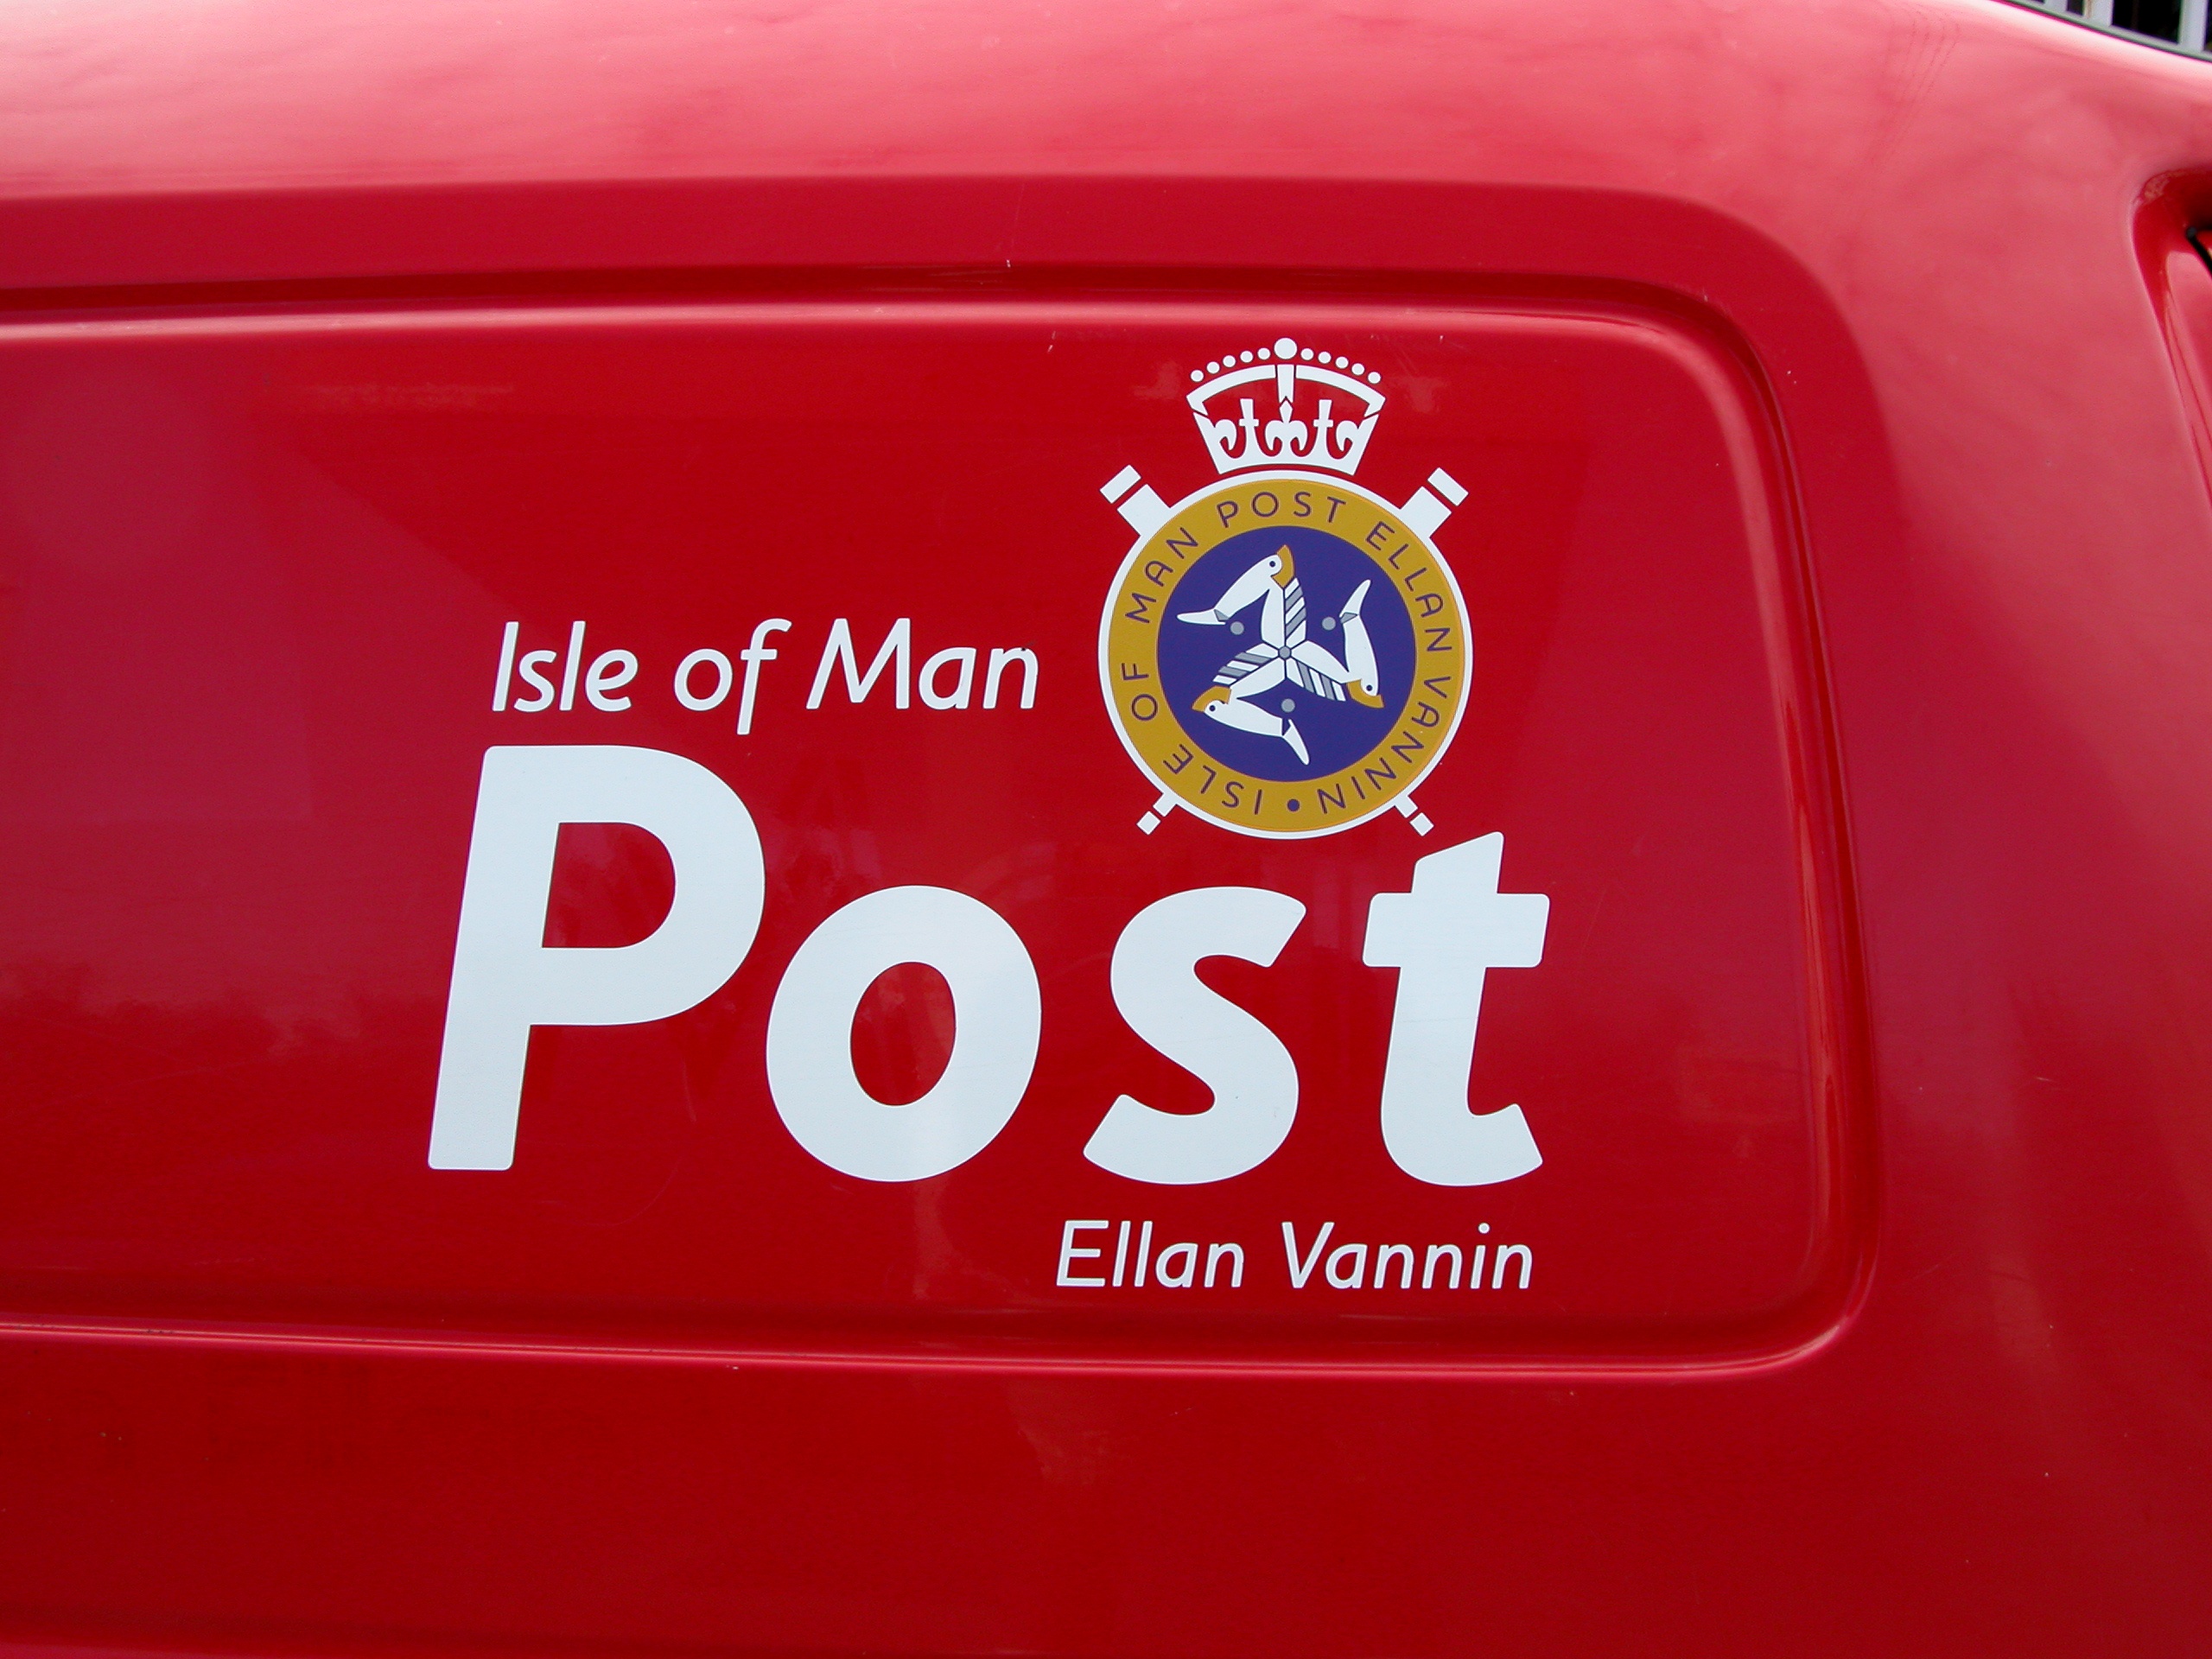 Post Office Mail Van